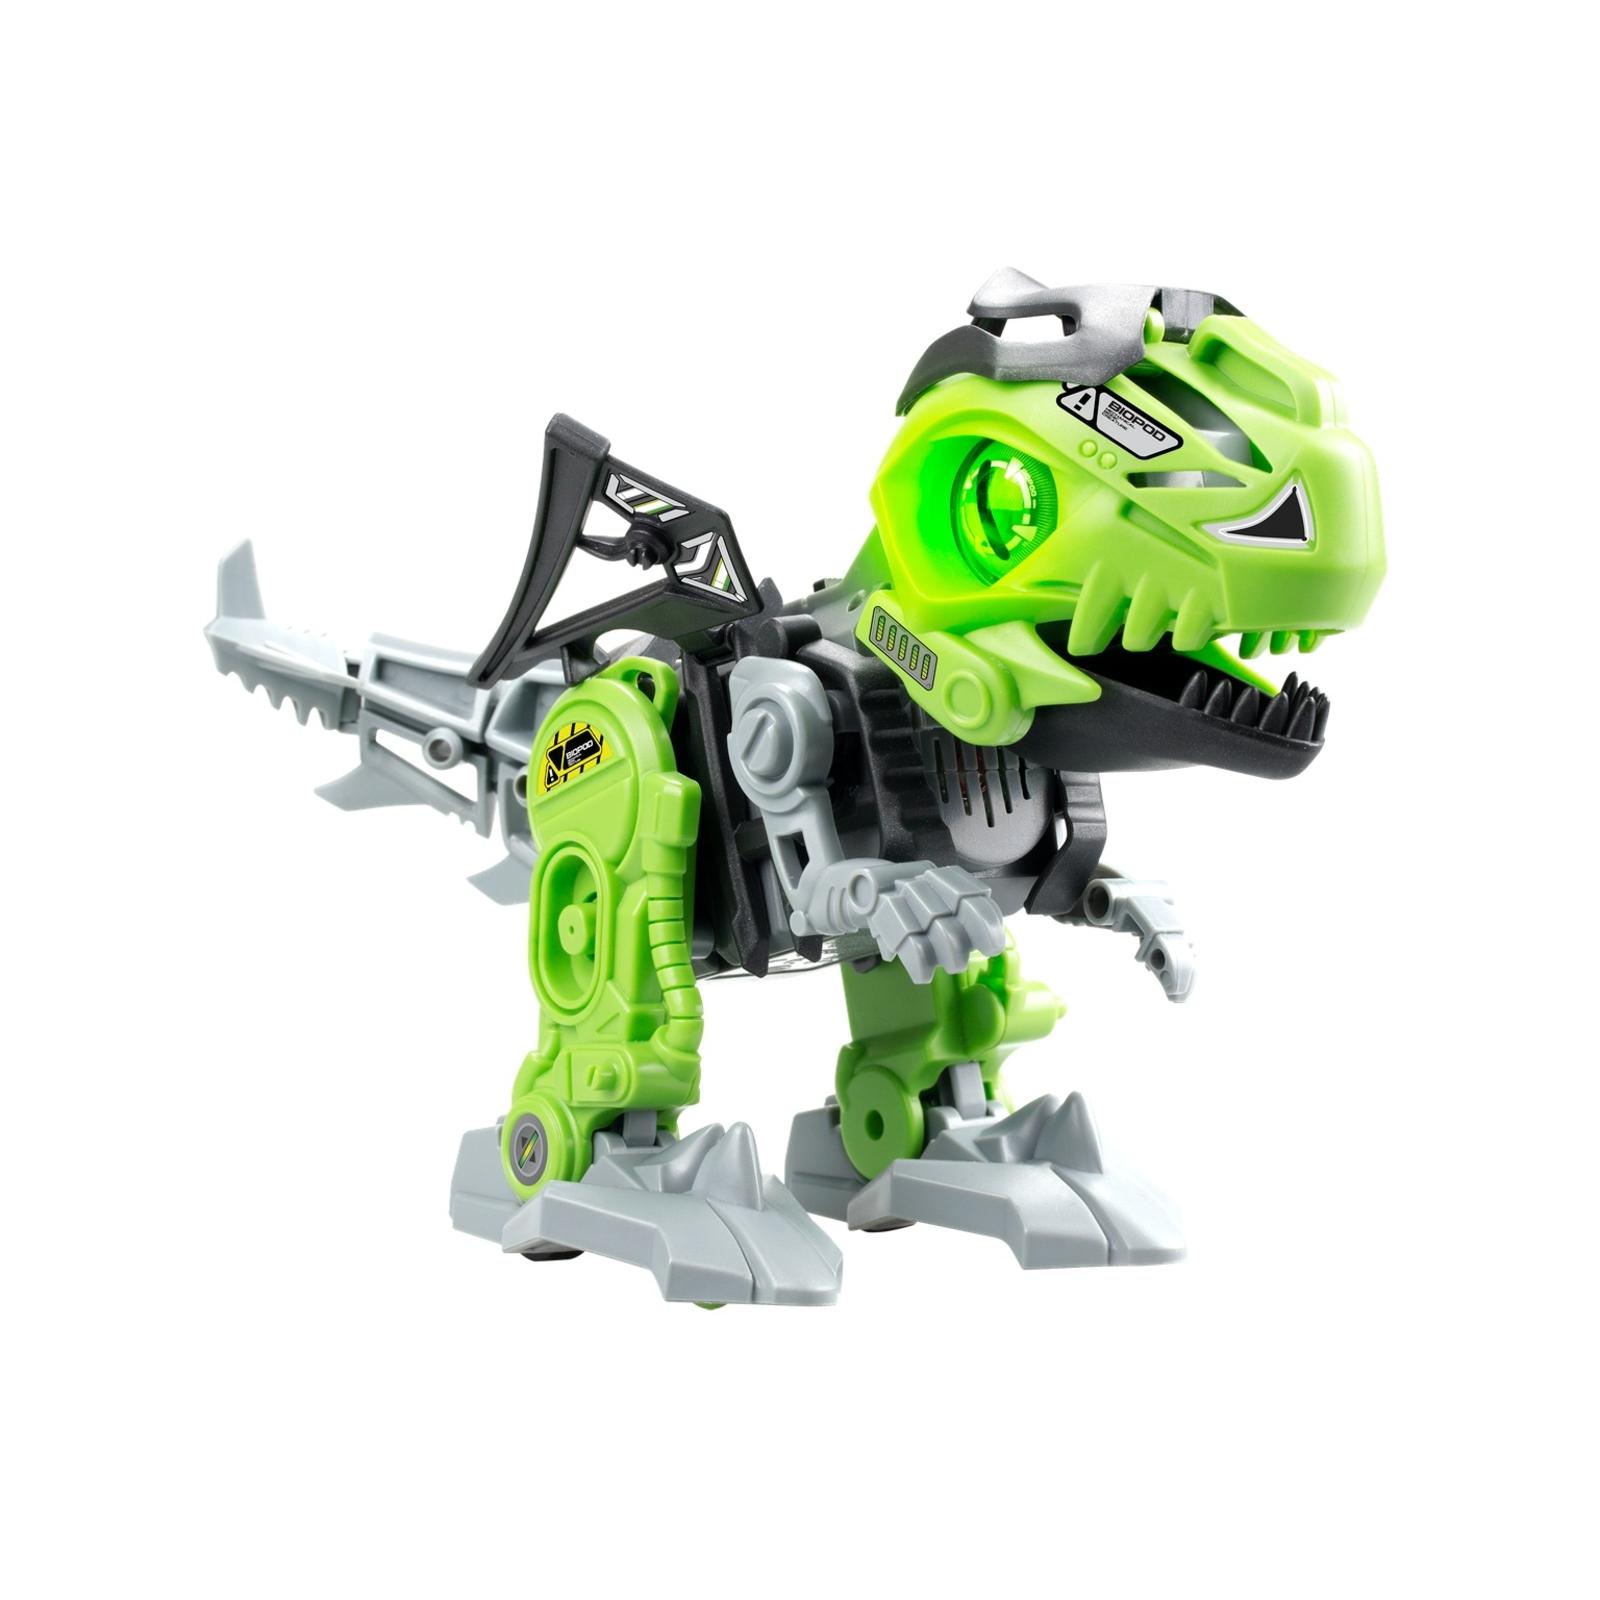 Ycoo Biopod Cyberpunk Inmotion Dino Robot